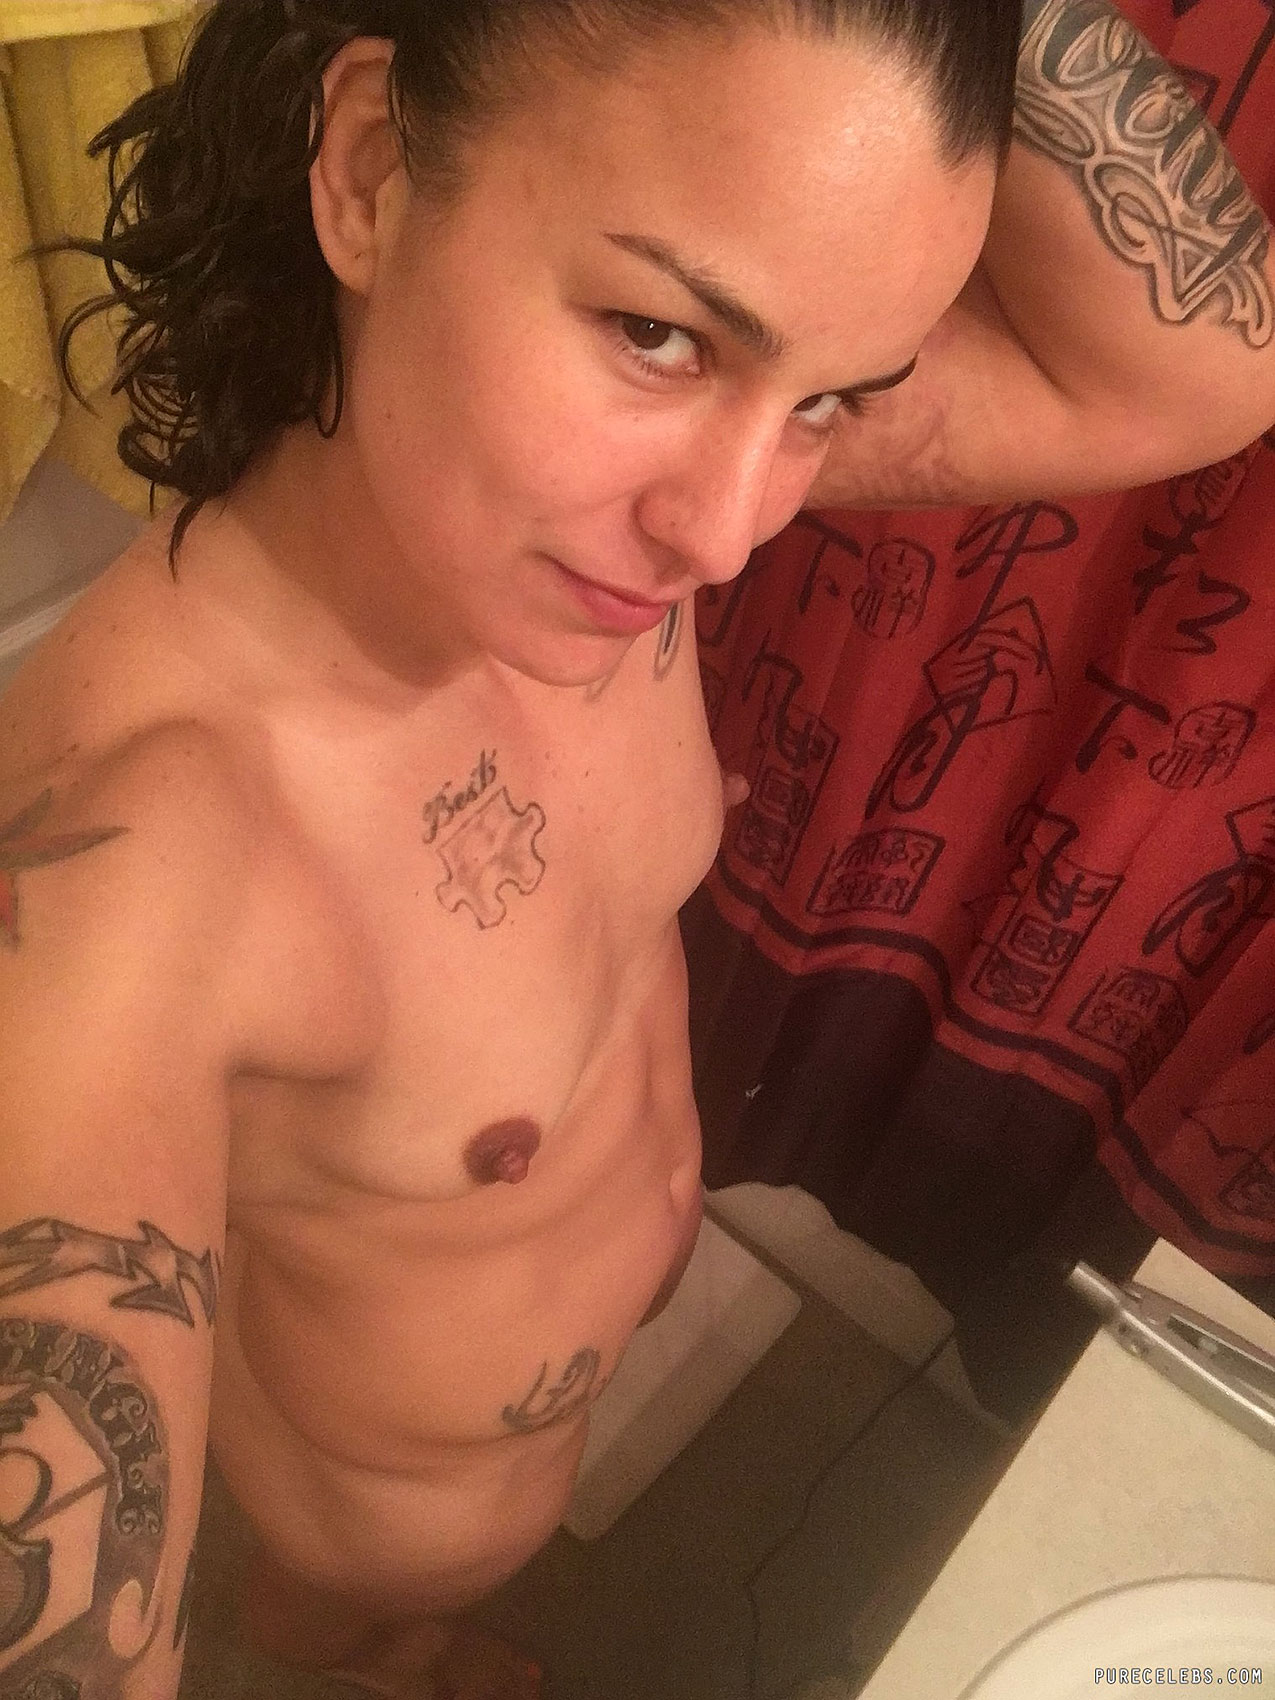 Raquel Pennington nude leaked pics.